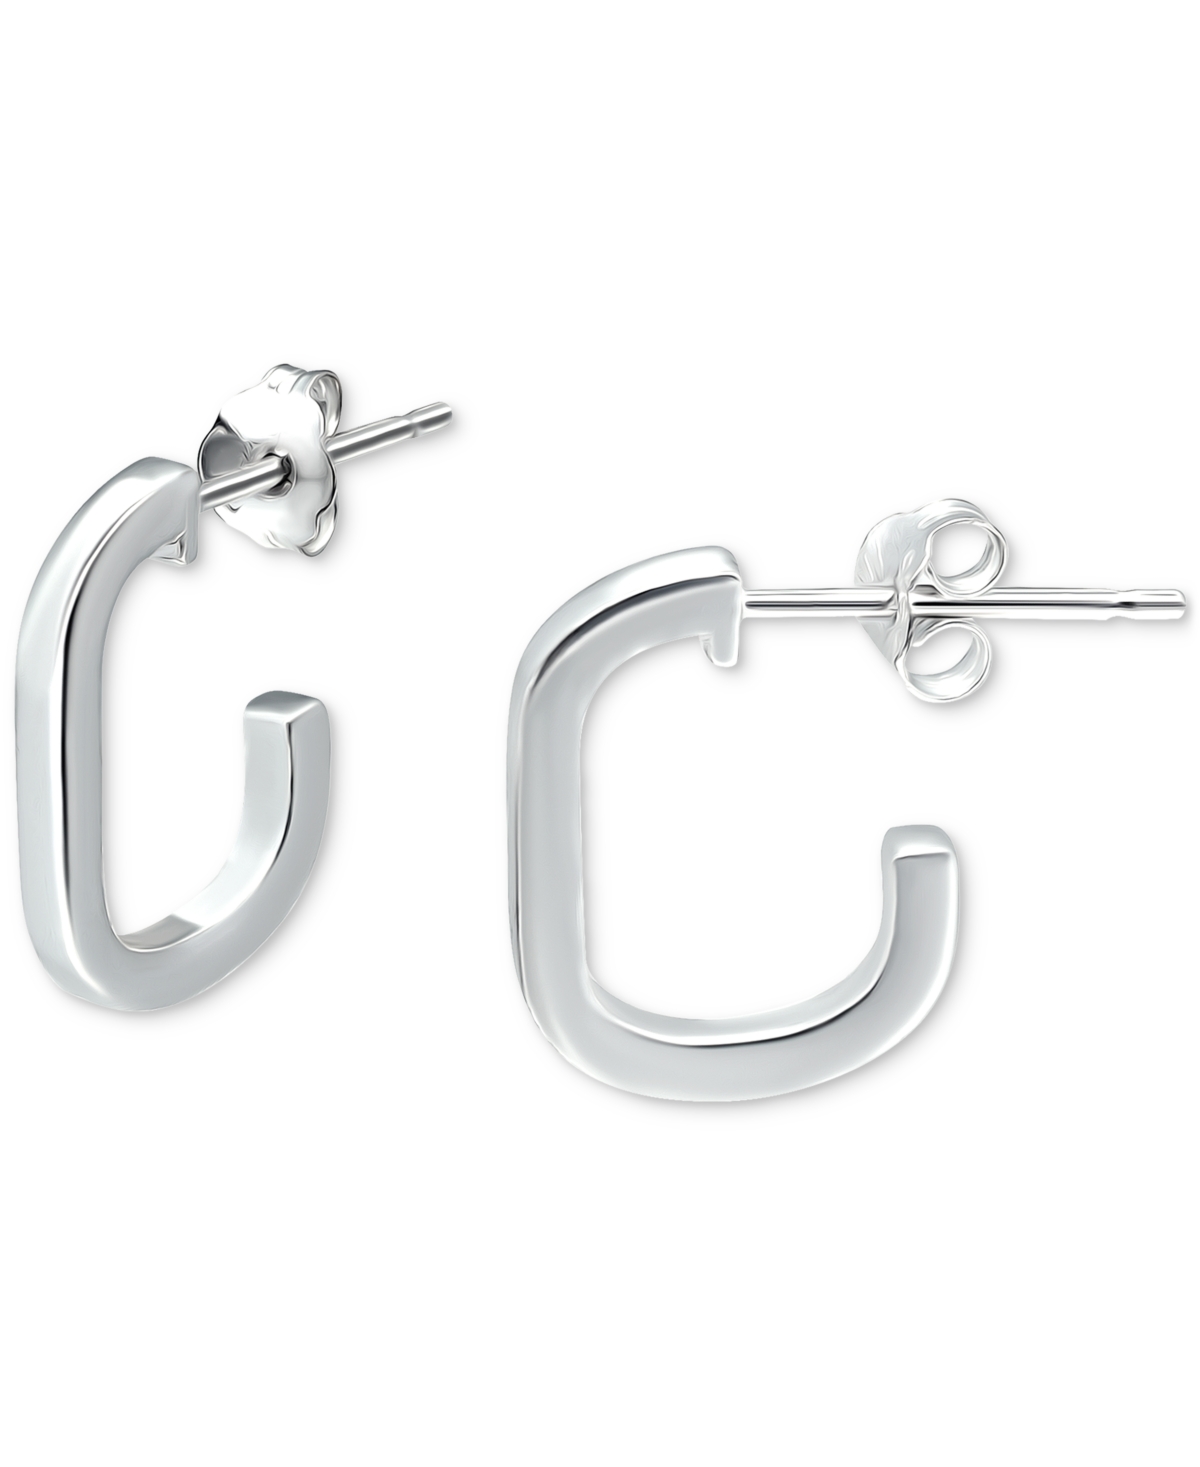 Giani Bernini Square Tube Small Hoop Earrings, Created For Macy's In Silver